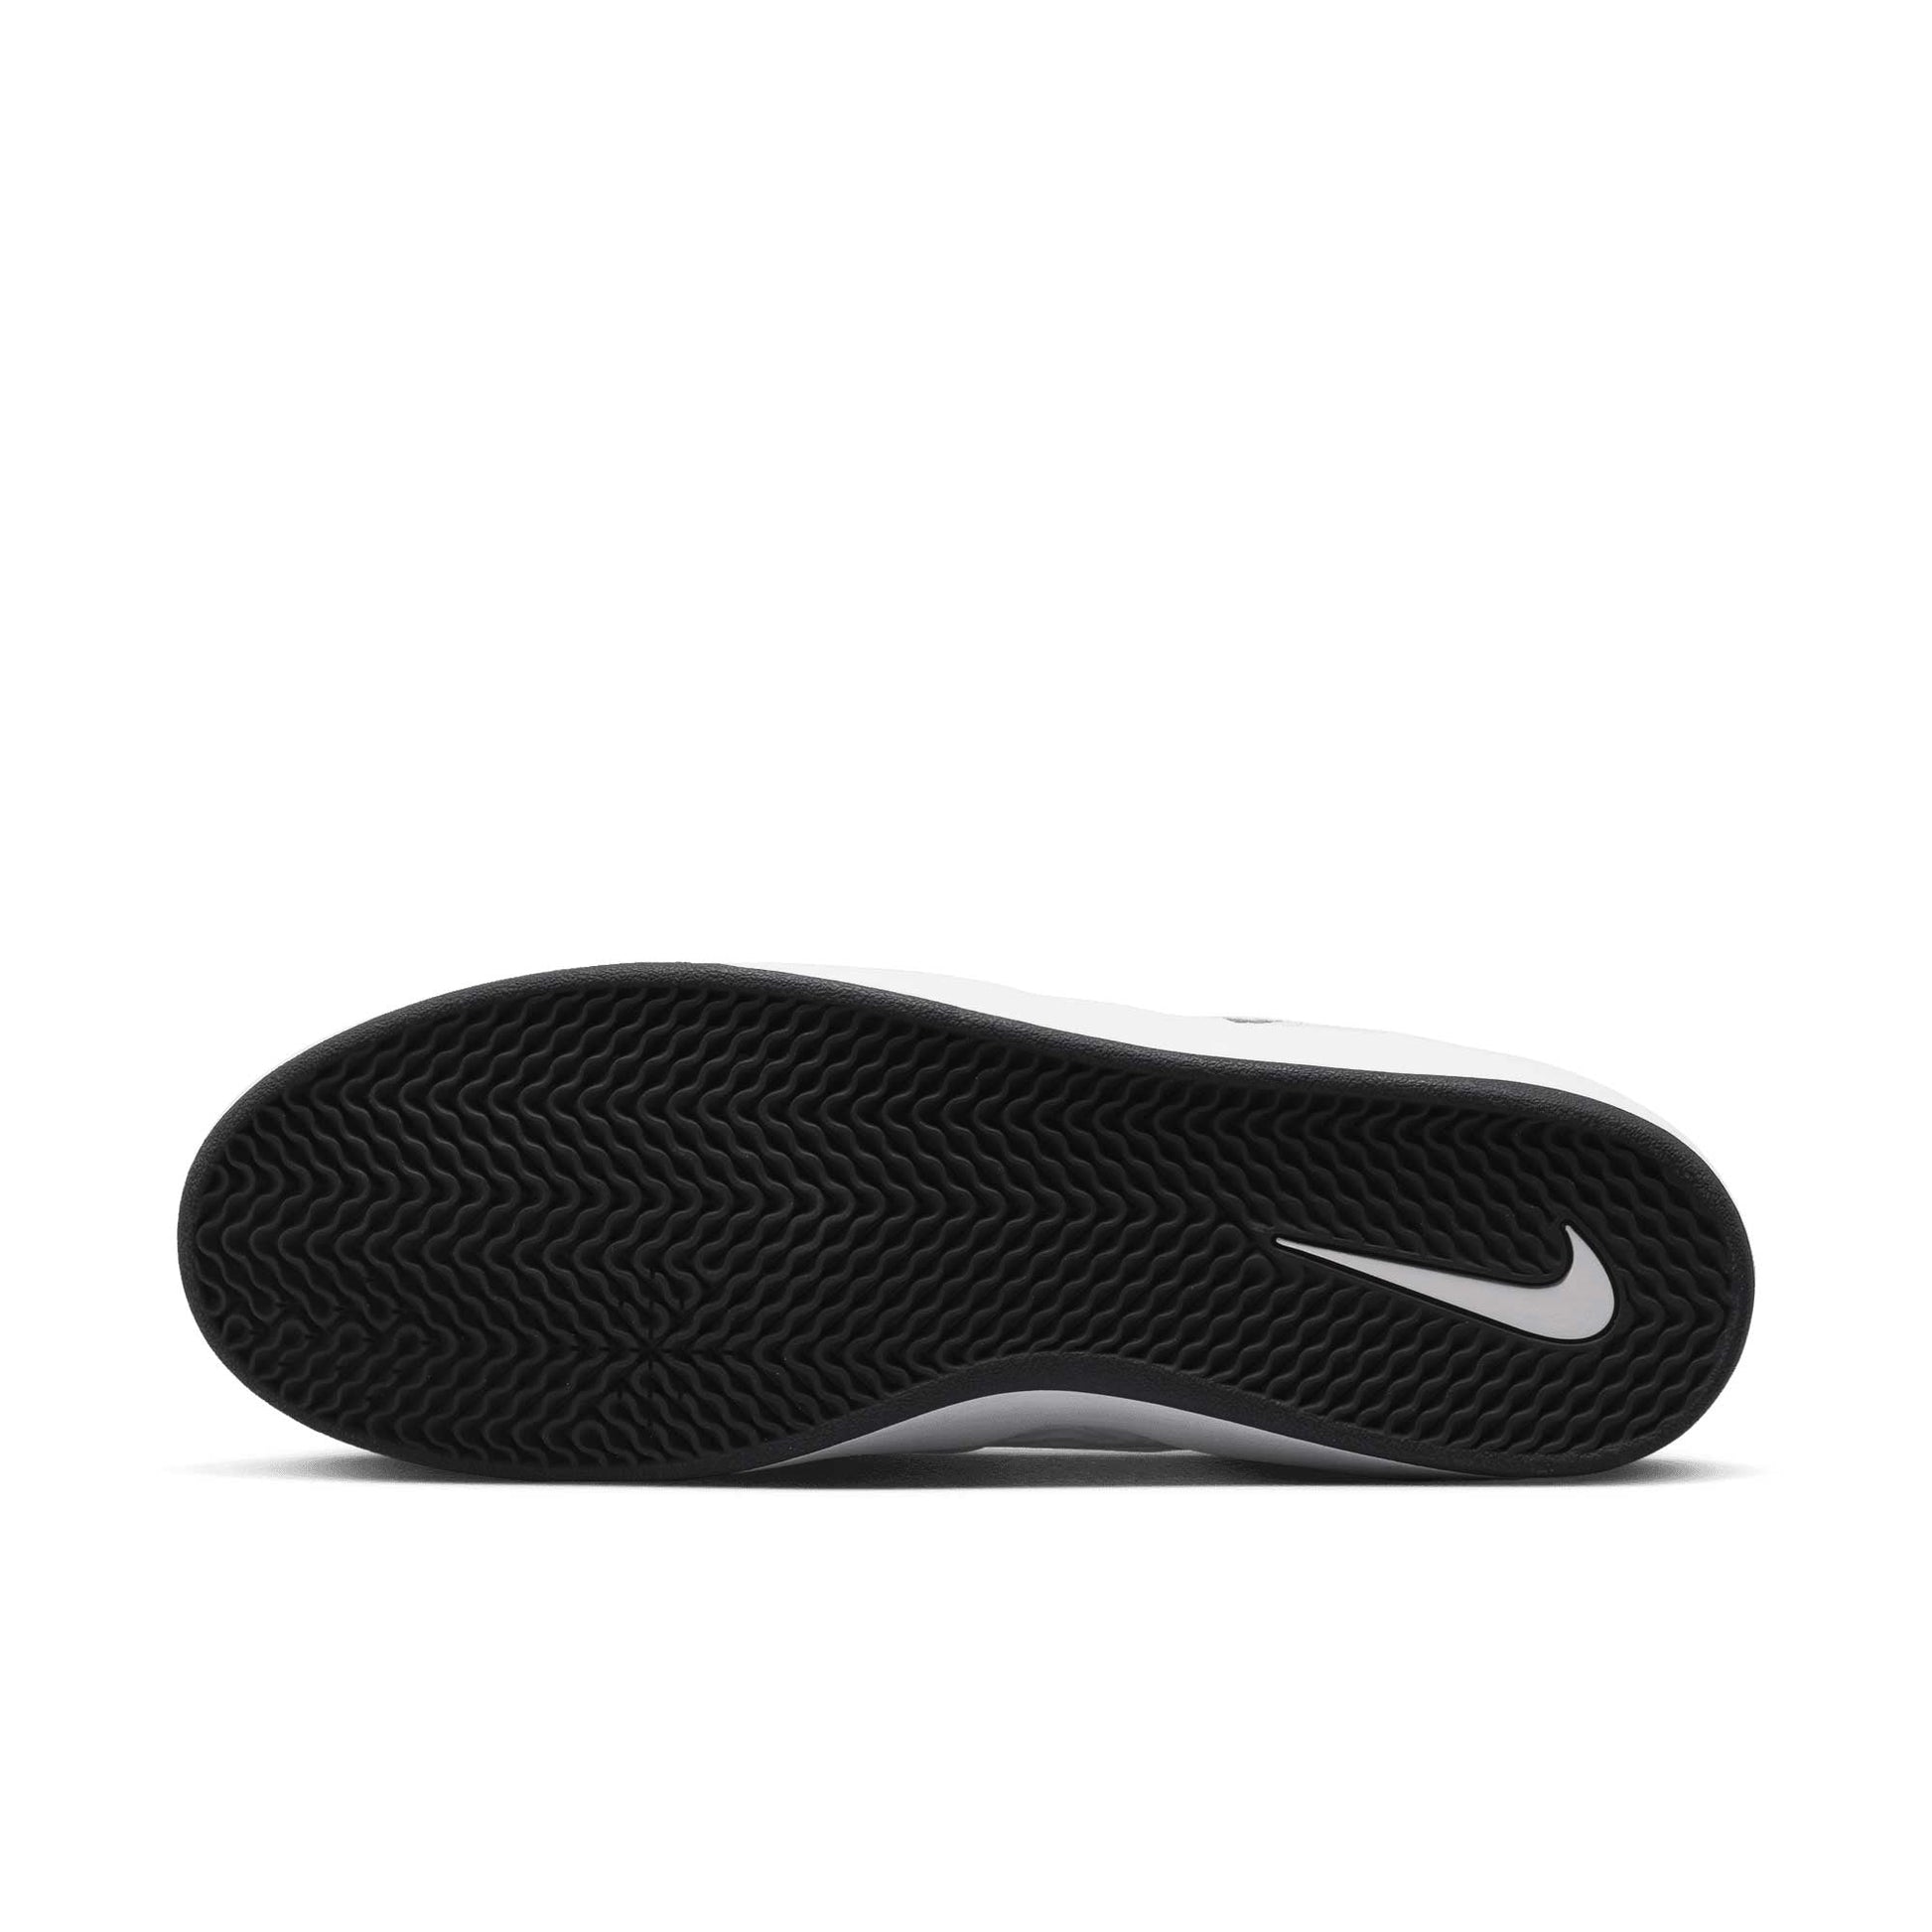 Nike SB Ishod Wair Premium, white/black-white-black - Tiki Room Skateboards - 9